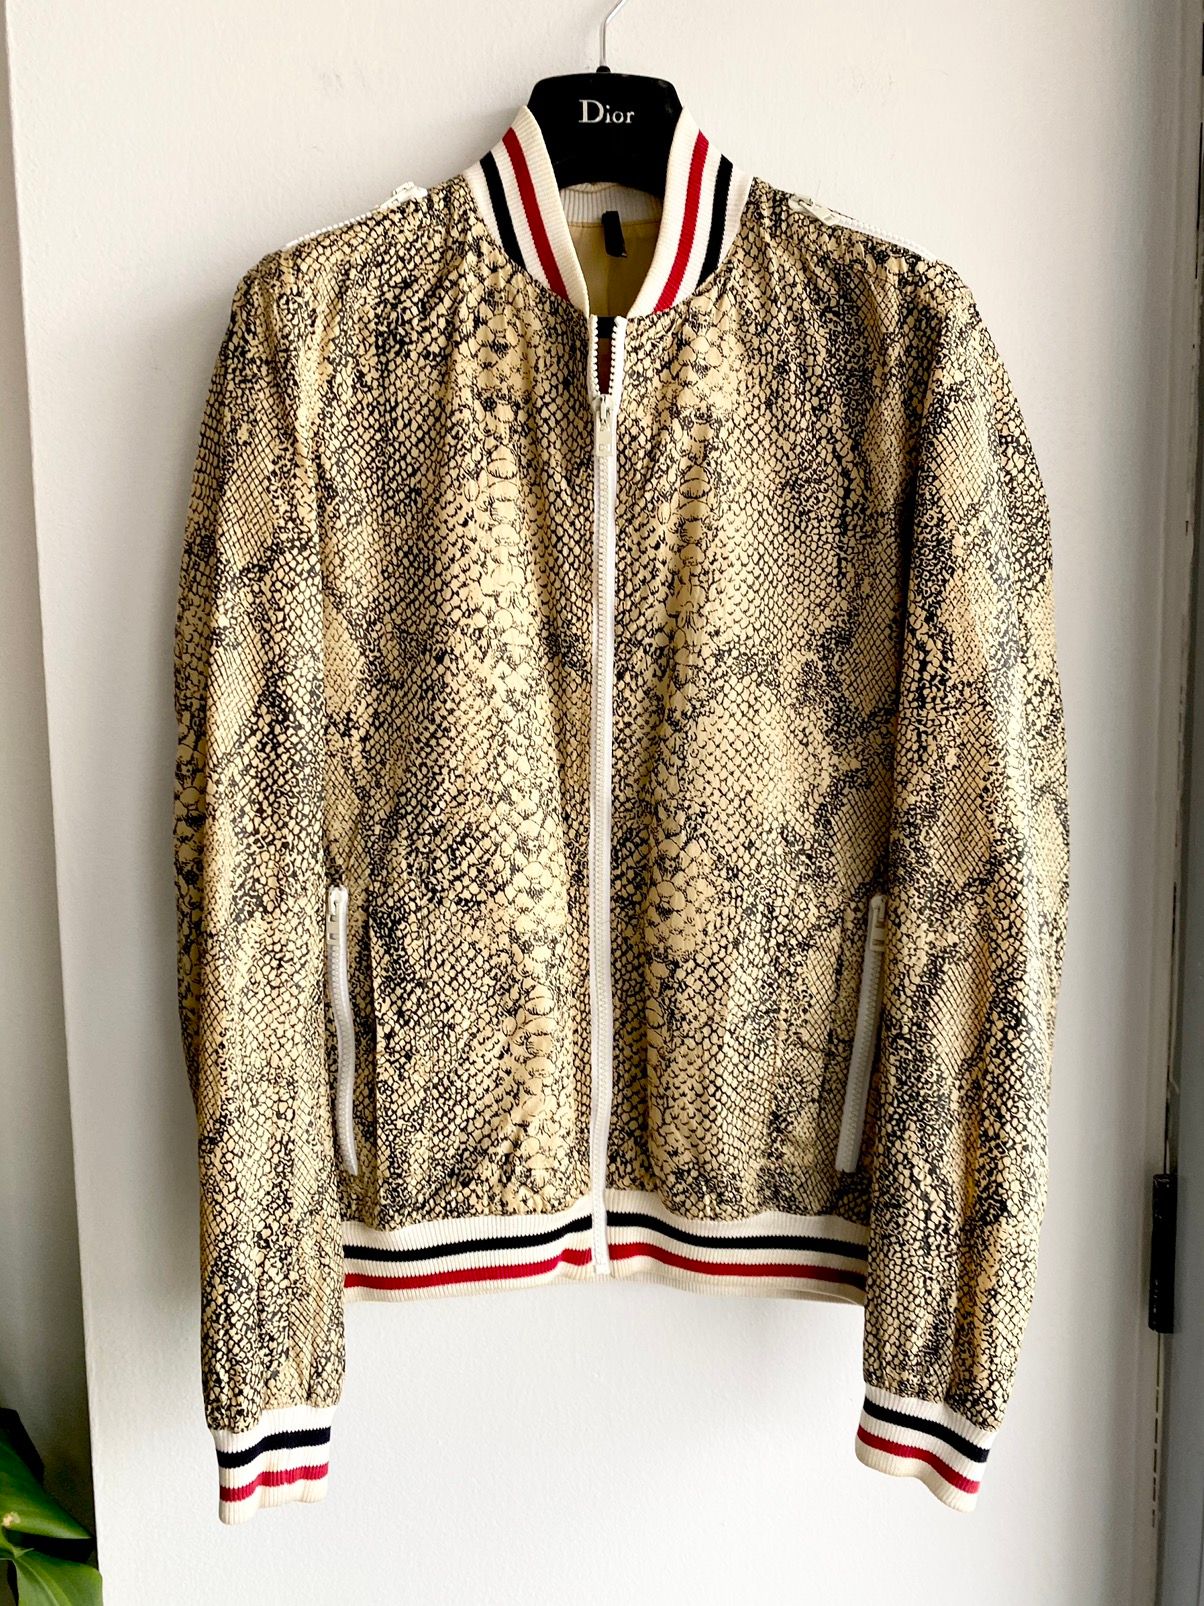 Dior Homme SS06 Runway Look #51 Python Print SILK Jacket